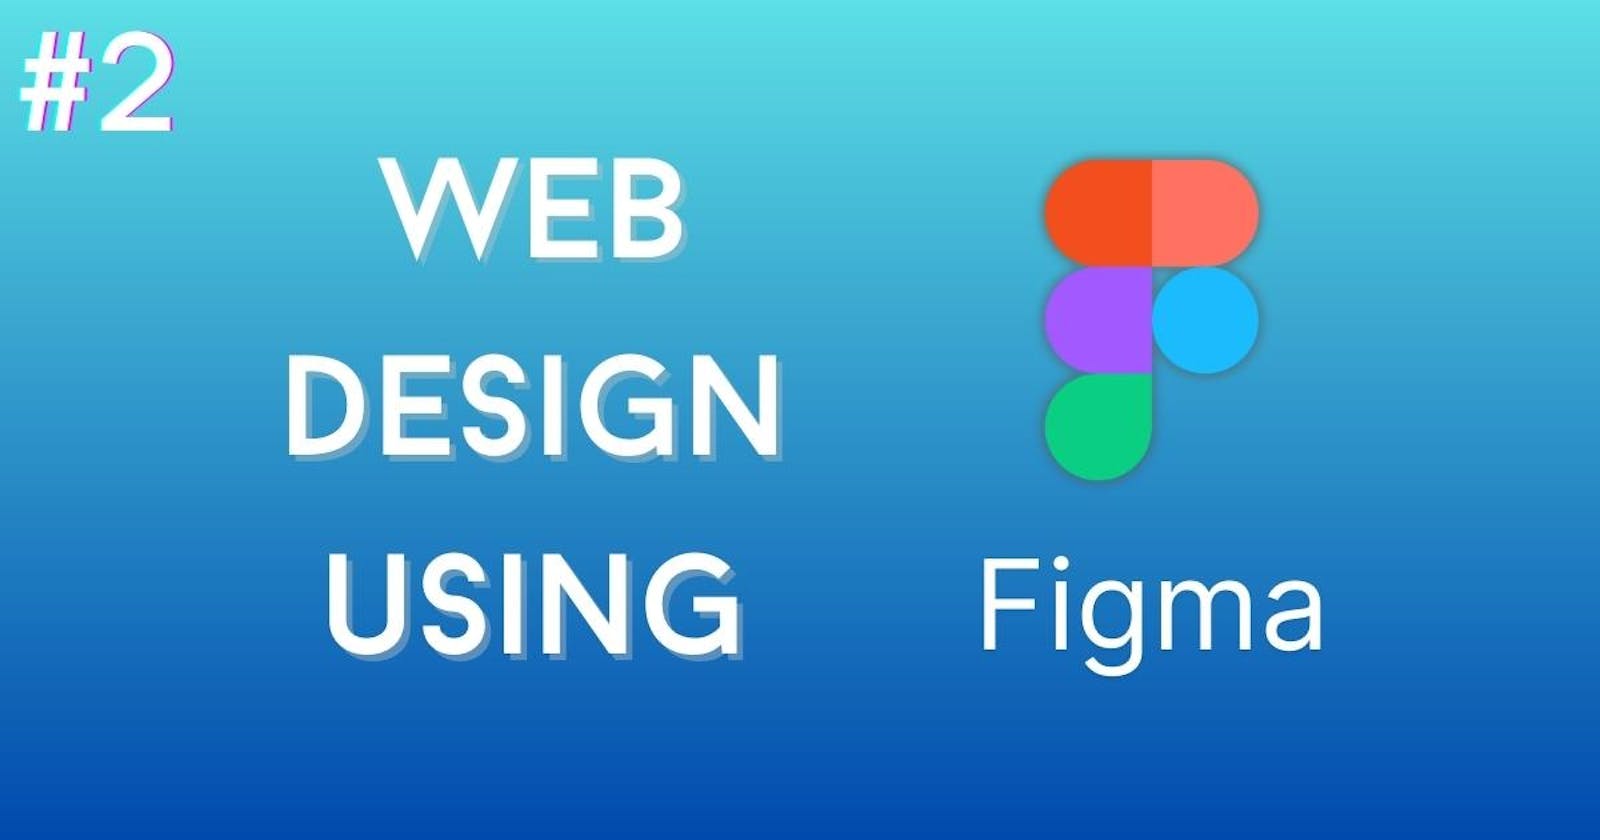 Web Design using Figma - Part 2